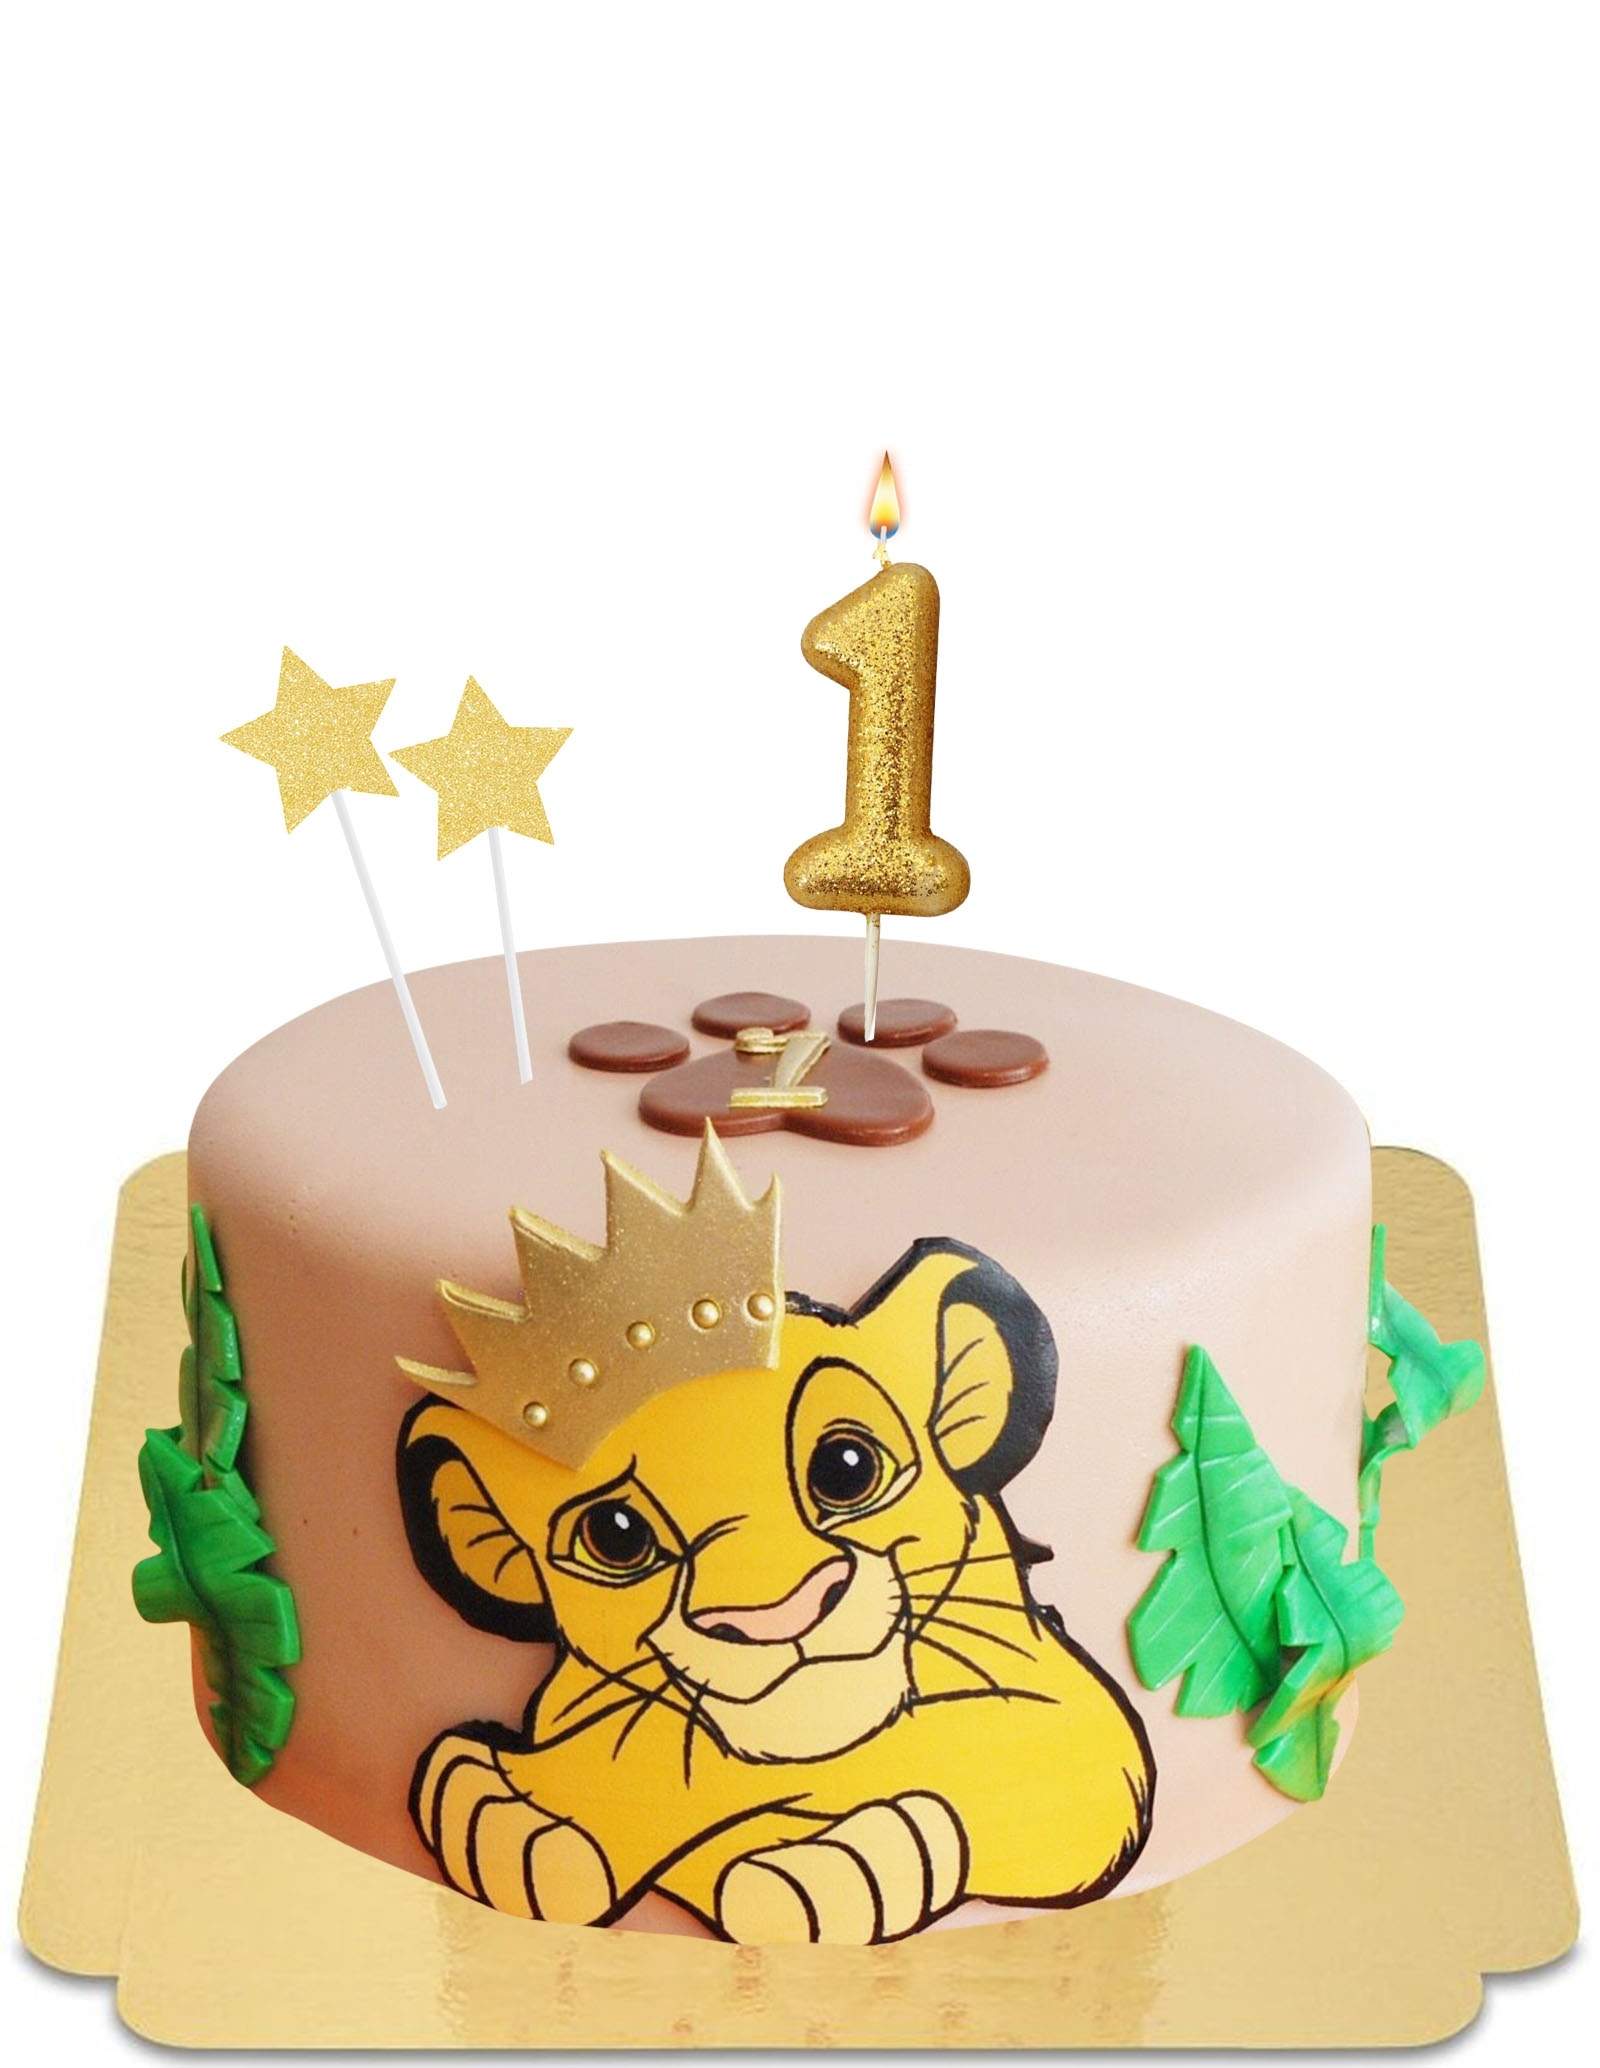 Simba Cake | Disneys The Lion King (How To) - YouTube